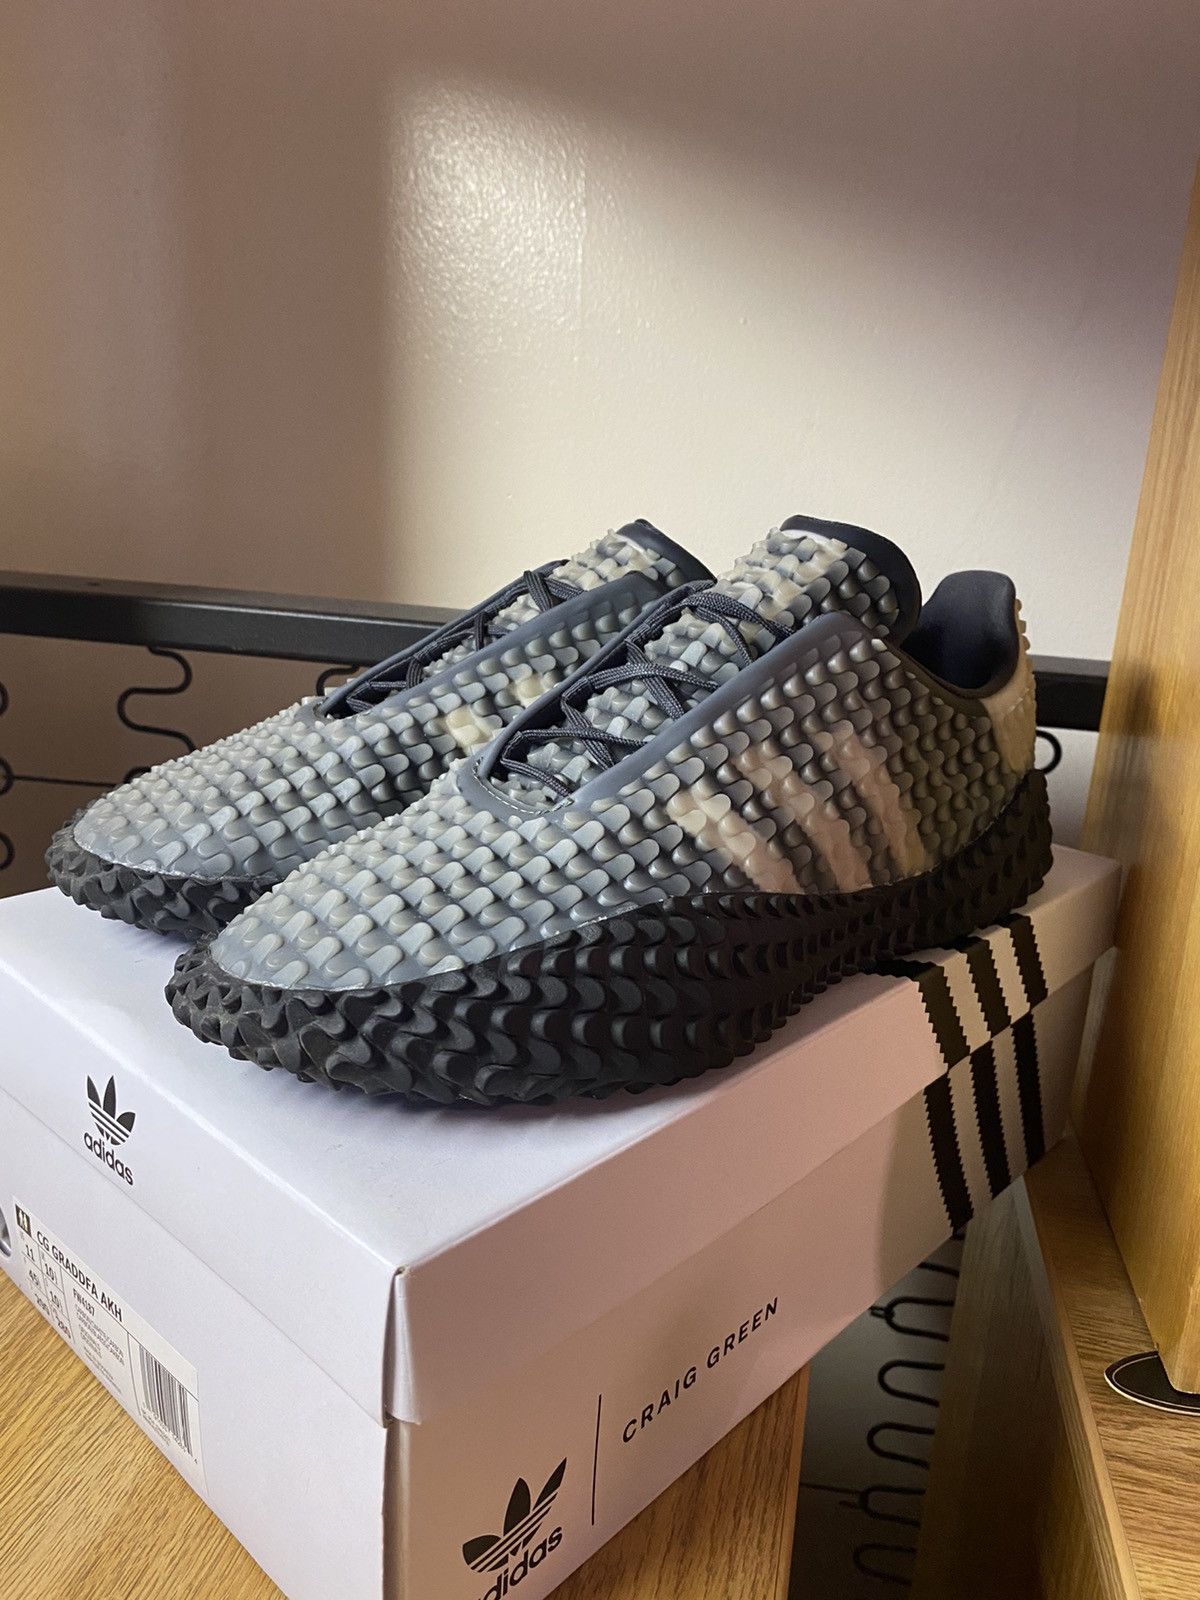 Adidas CG Graddfa AKH lowtop textured sneakers | Grailed